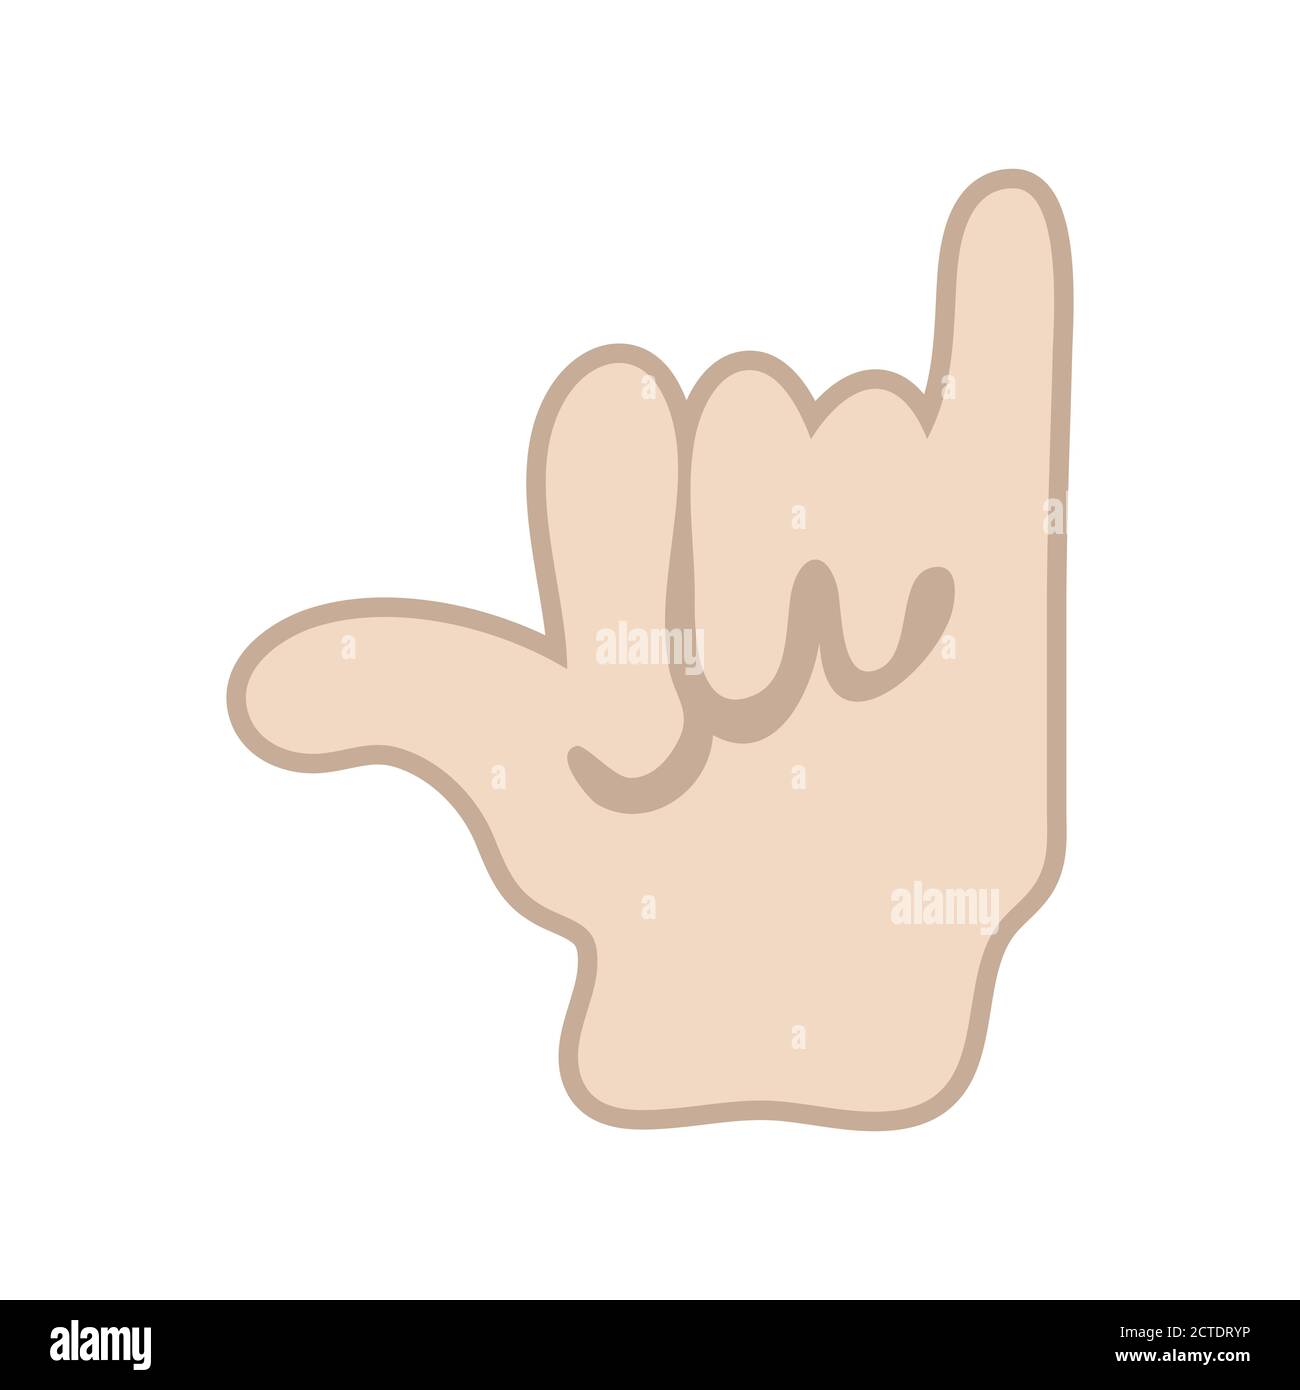 Shaka hand gesture, hang loose, symbol for surfer greeting, cartoon vector illustration design Stock Vector